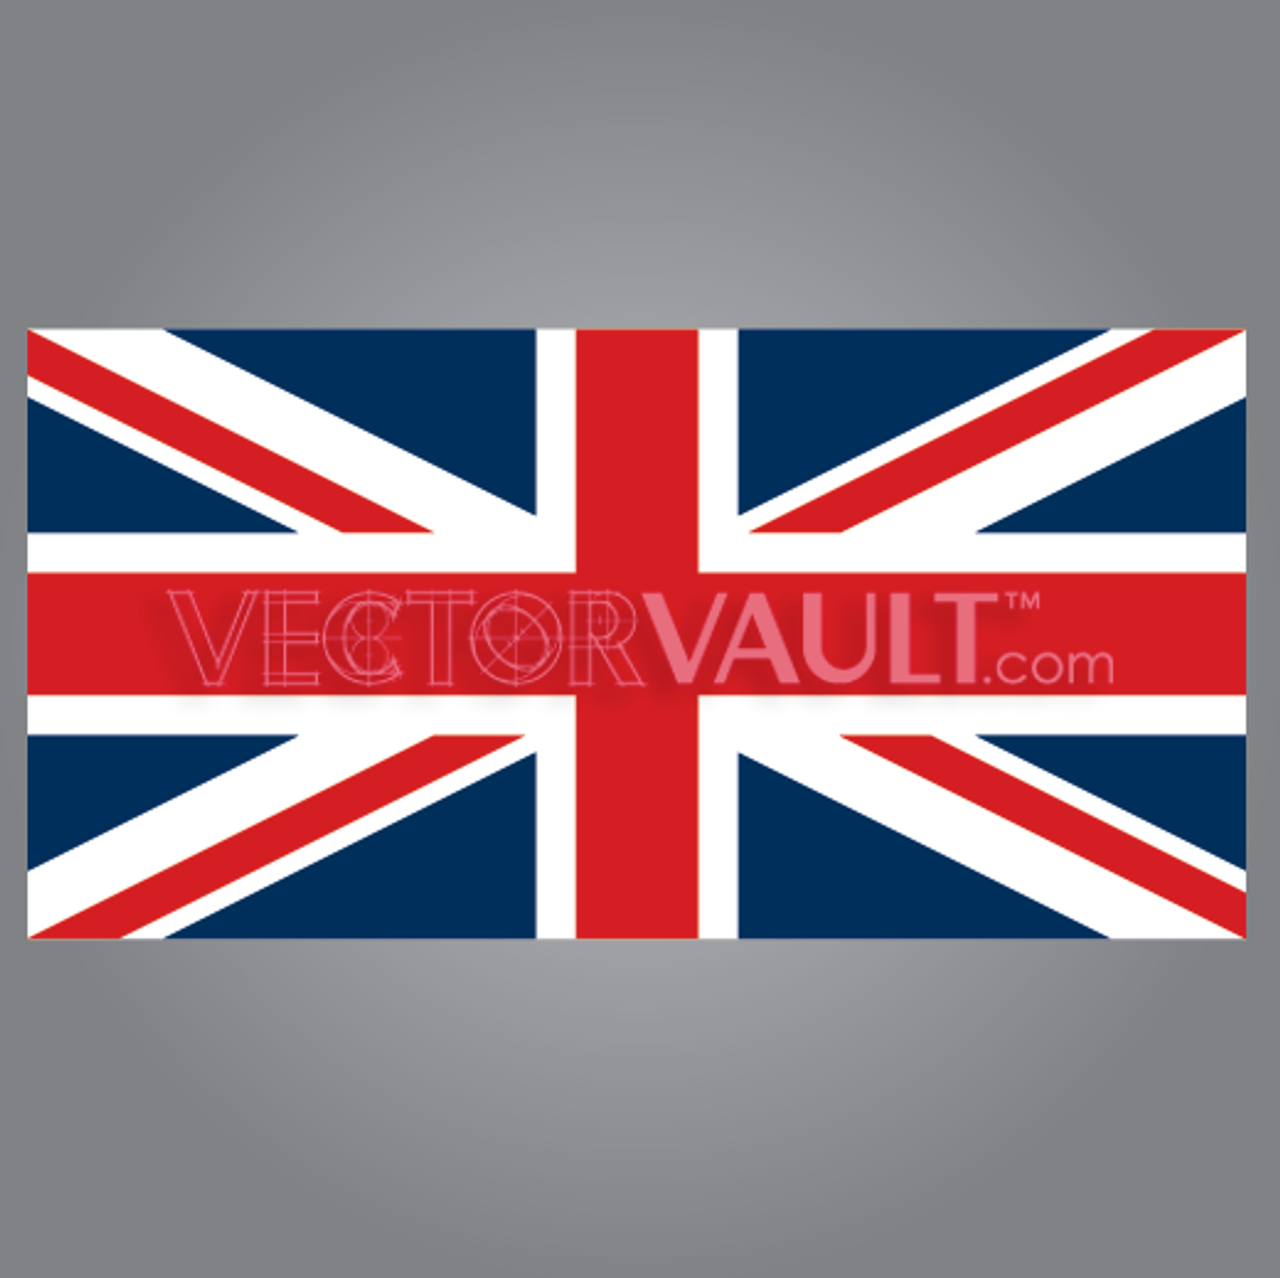 United Kingdom flag icon. Great Britain Union Jack. Stock Vector